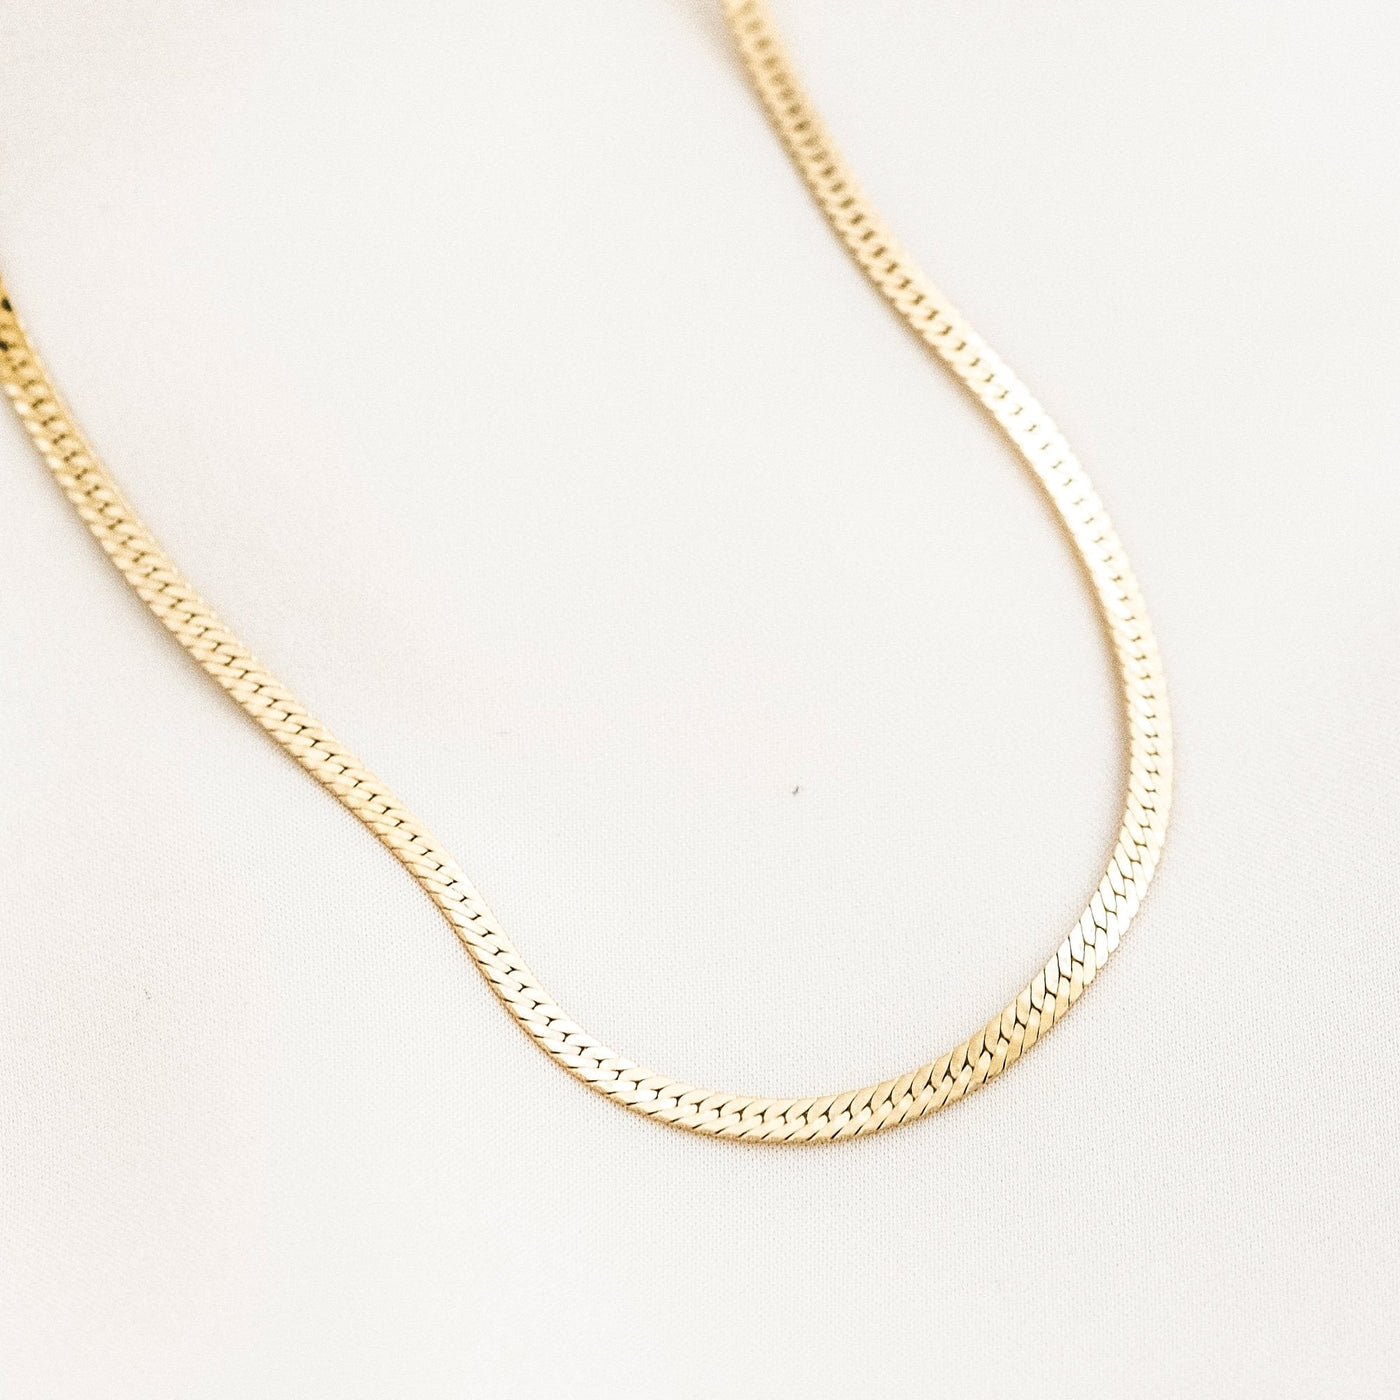 14k Gold Filled herringbone necklace